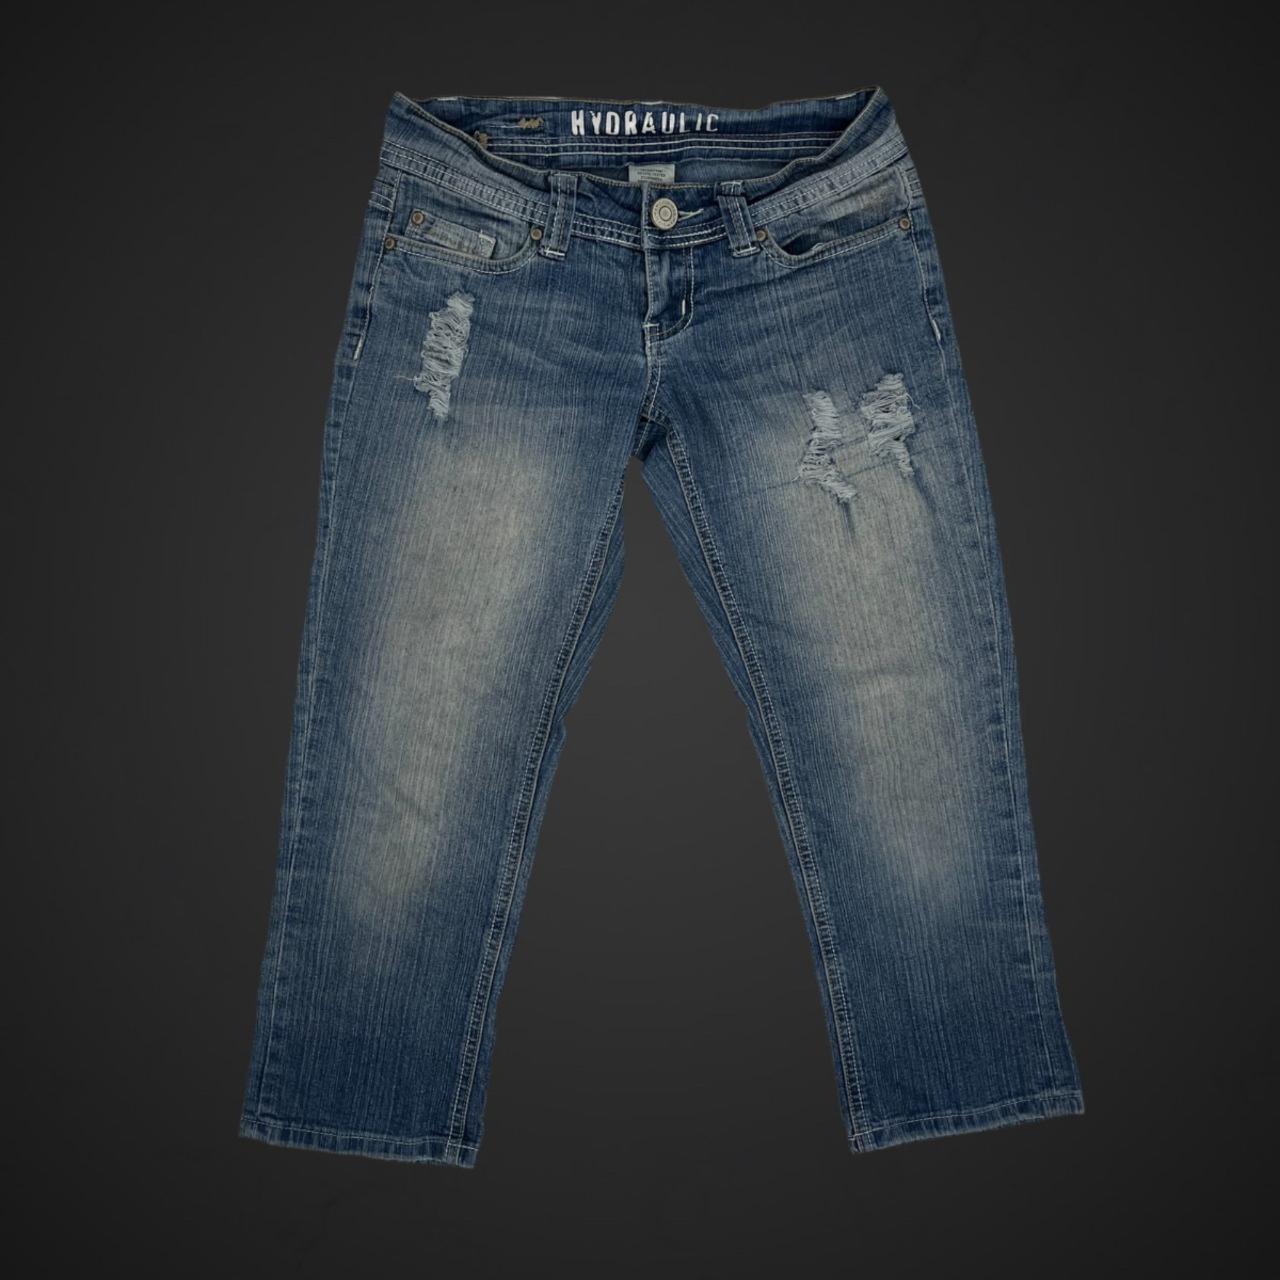 CULTURA Skinny Jeans for Little Boys Slim Wash Stretch Comfy Denim Pants,  Age 3-7, Blue Thick Stitch, Size 4 - Walmart.com